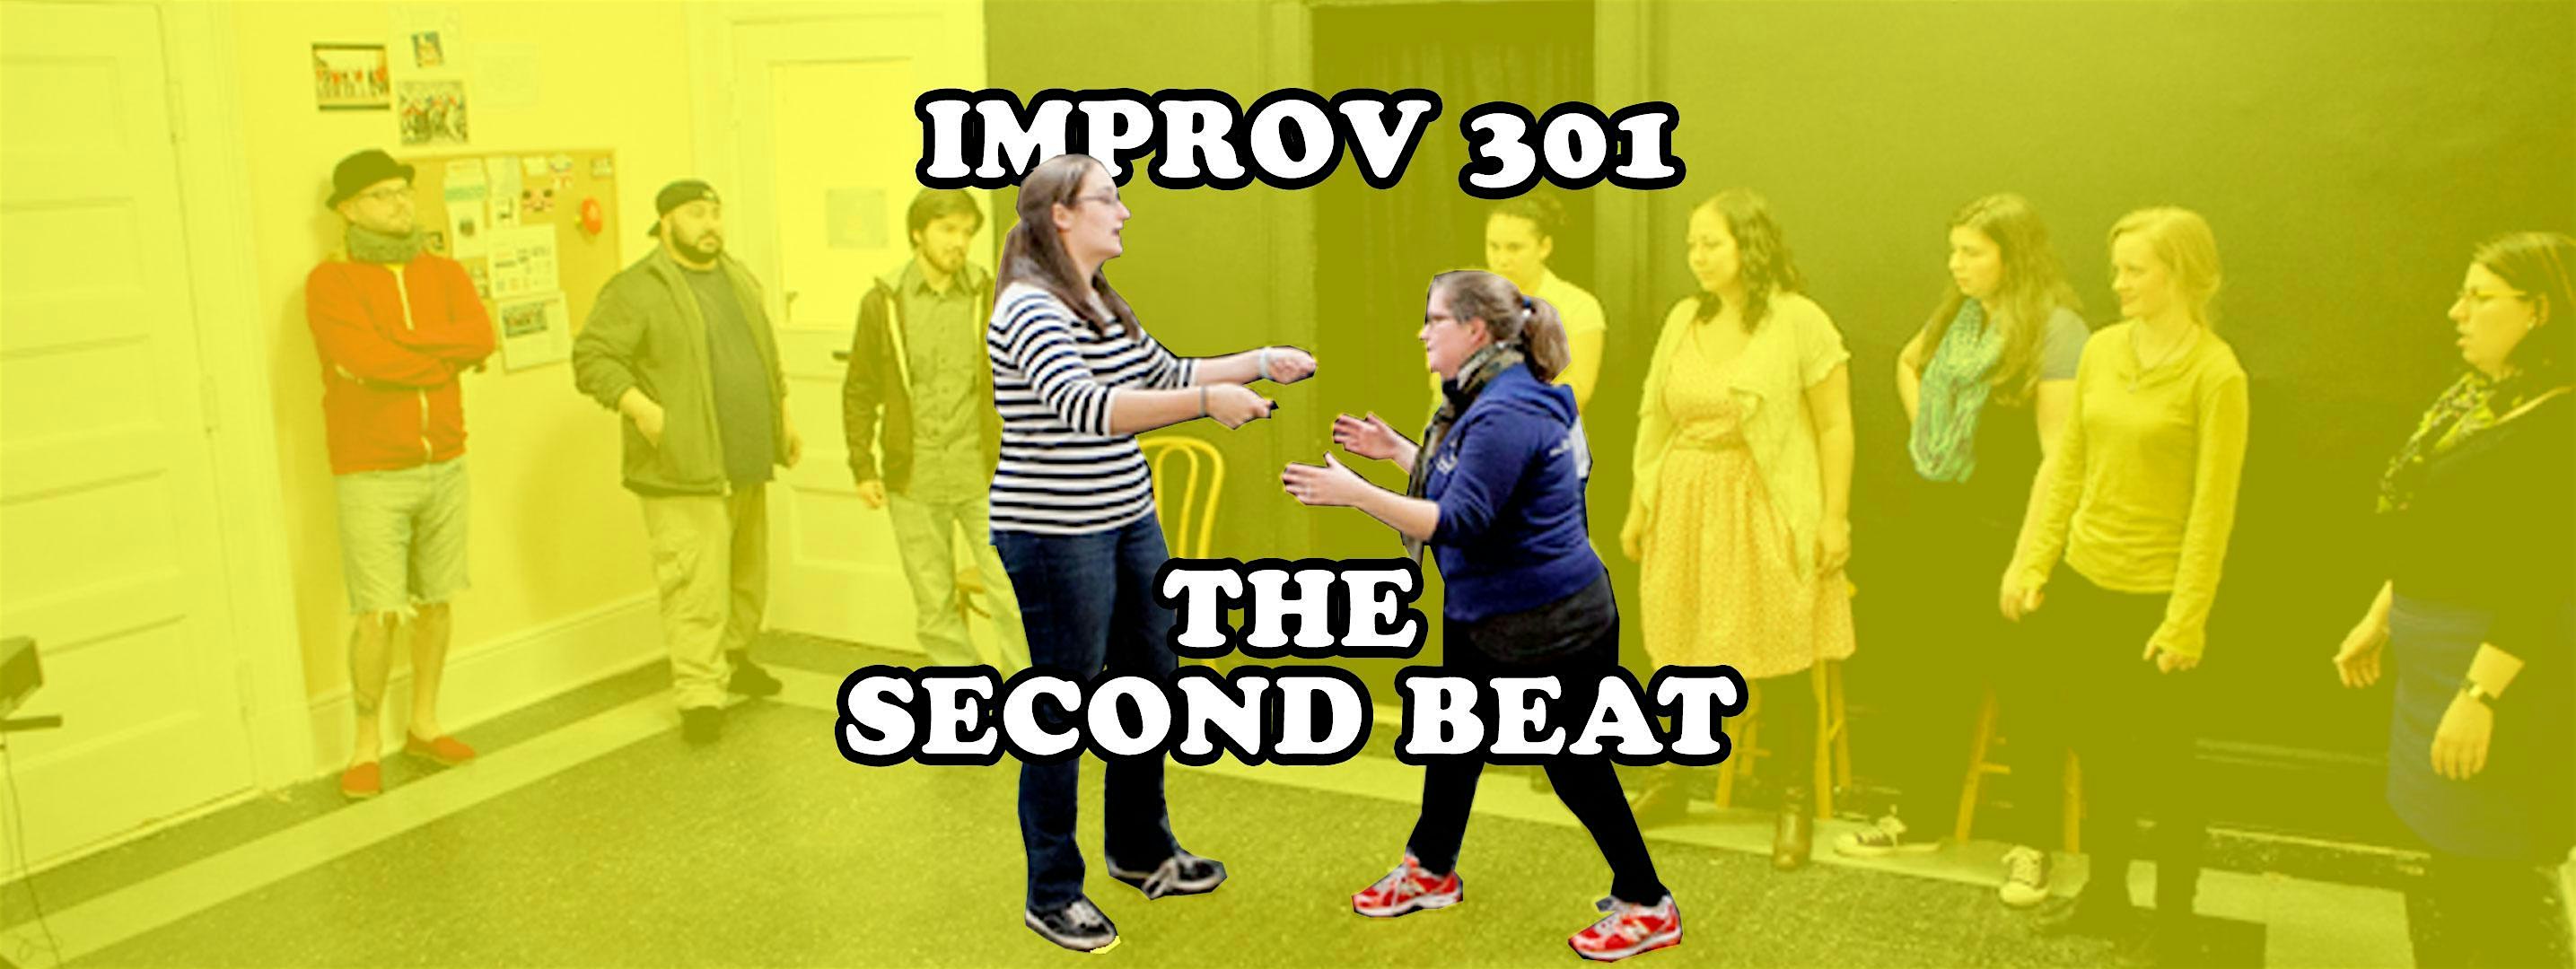 Improv 301: The Second Beat